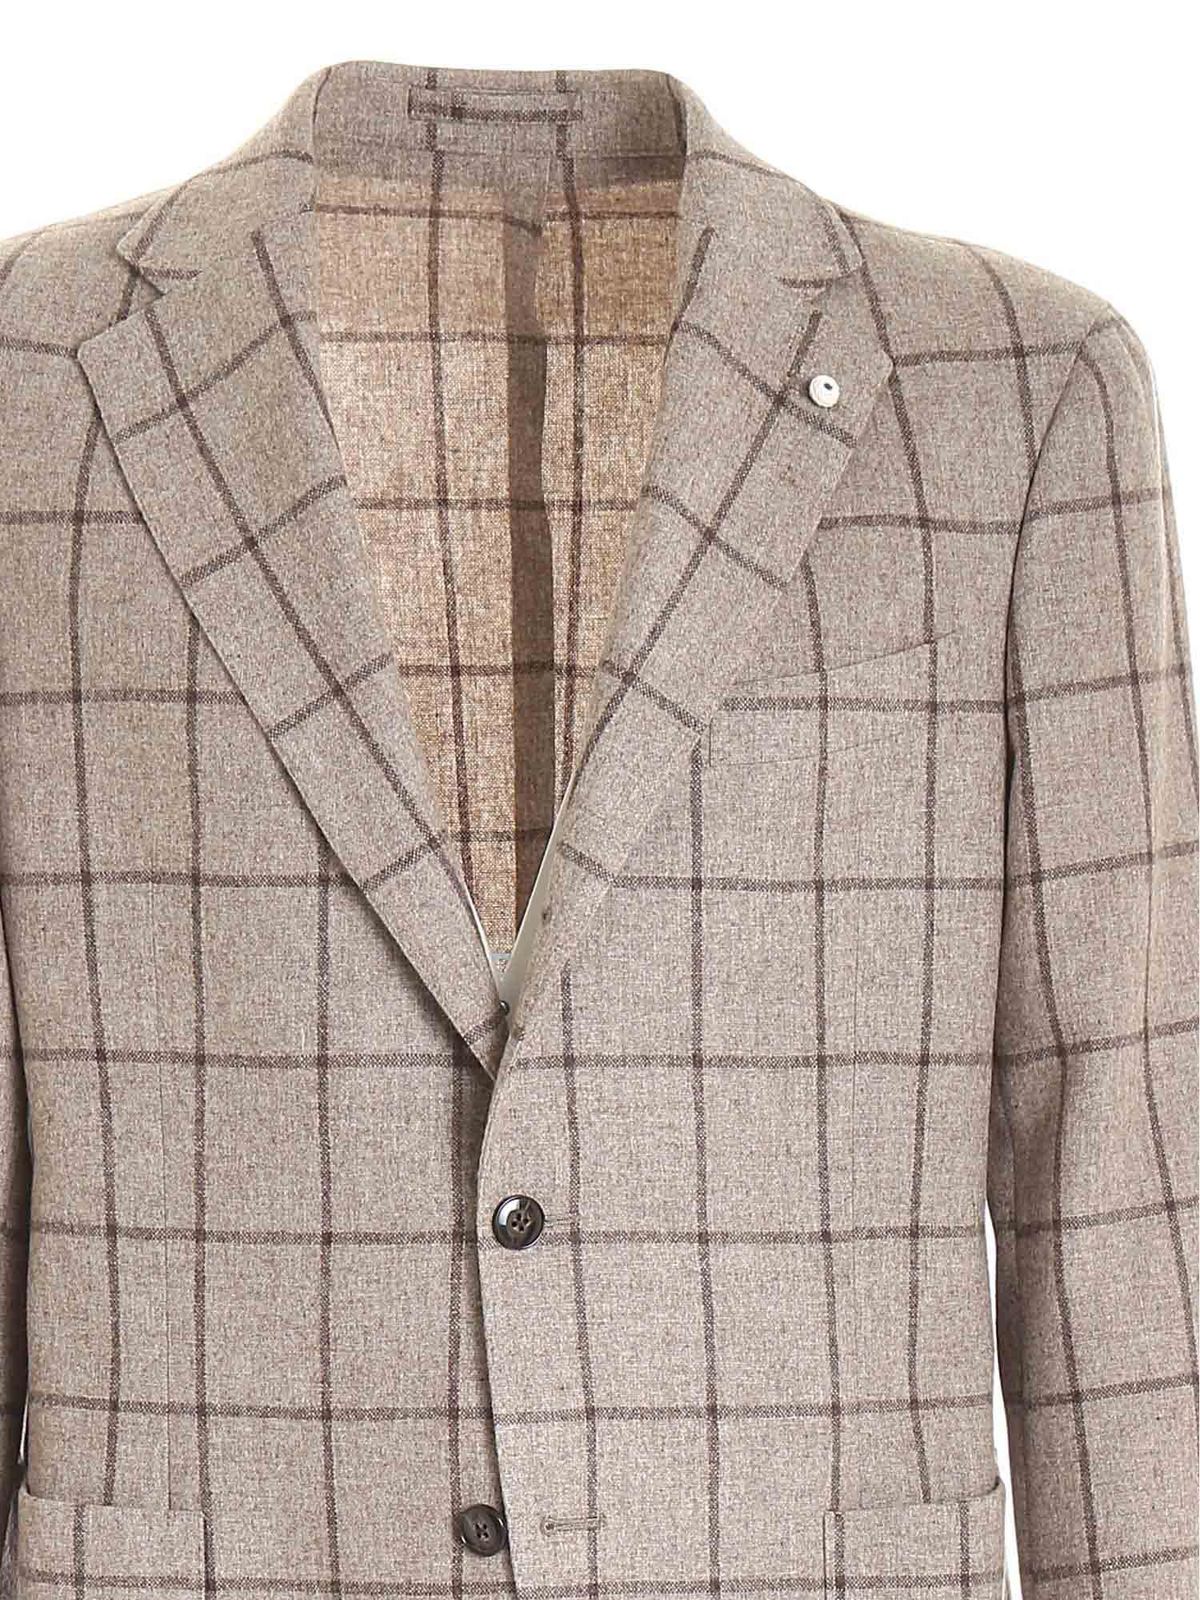 Blazers Brando - Dream checkered jacket in beige - 2401120652 | iKRIX.com